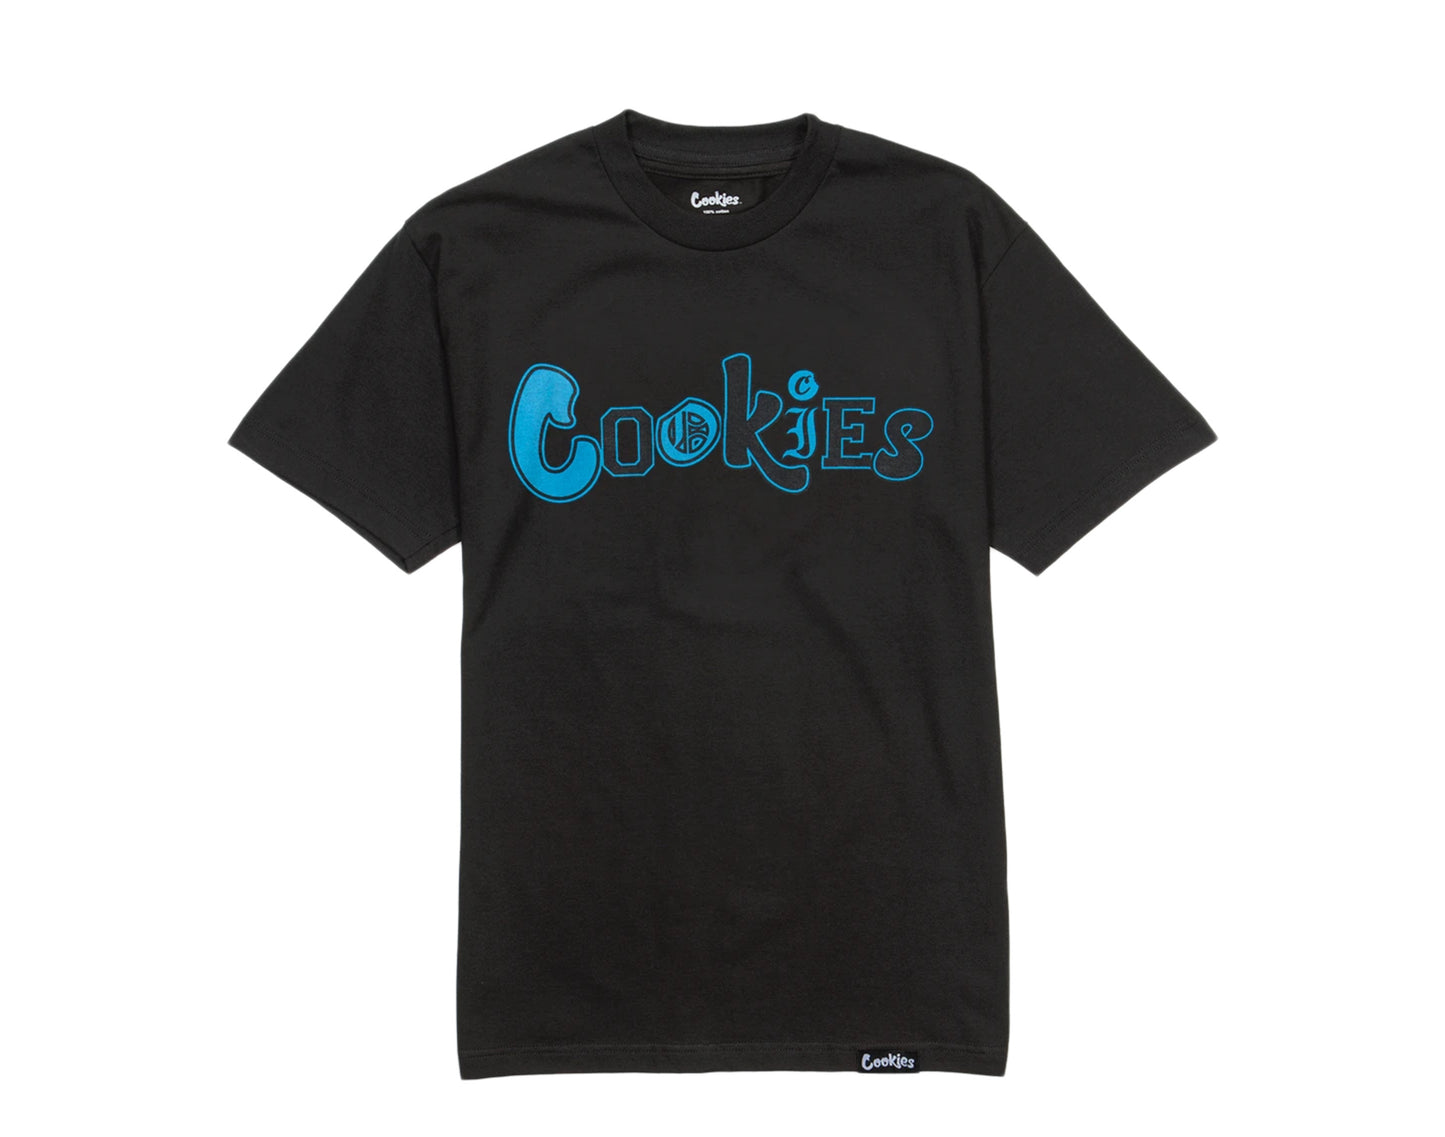 Cookies City Limits 2-Tone Printed Black/Blue Tee Shirt 1545T4115-BLK